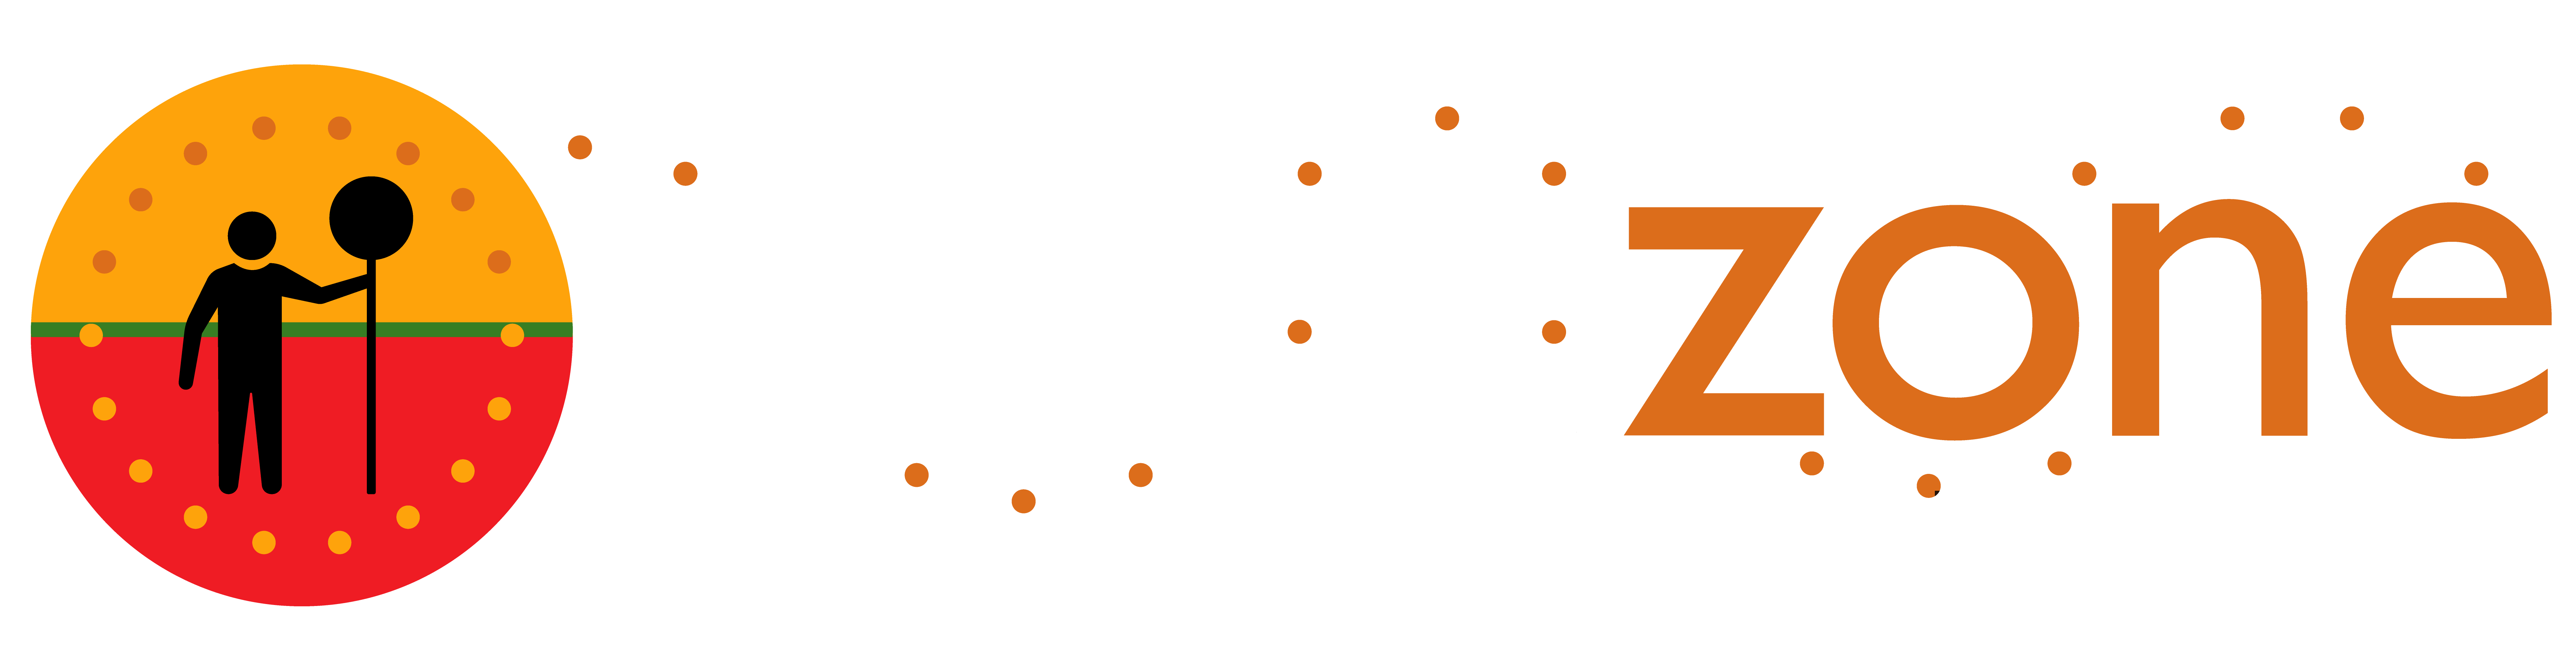 Workzone Territory Logo